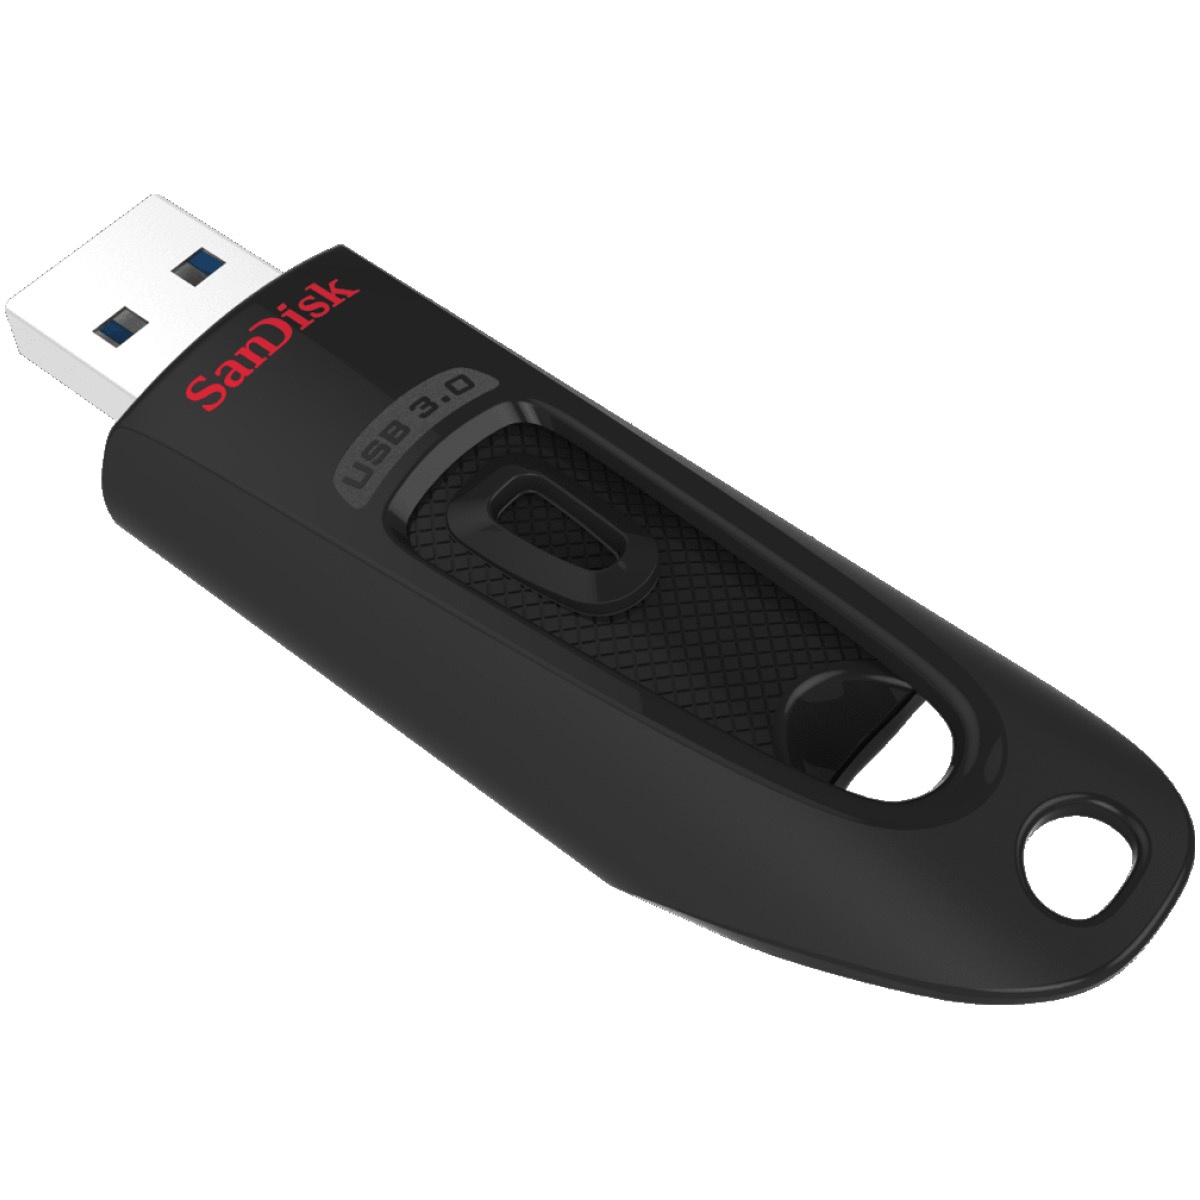 SanDisk 128 GB Ultra USB 3.0 Cruzer